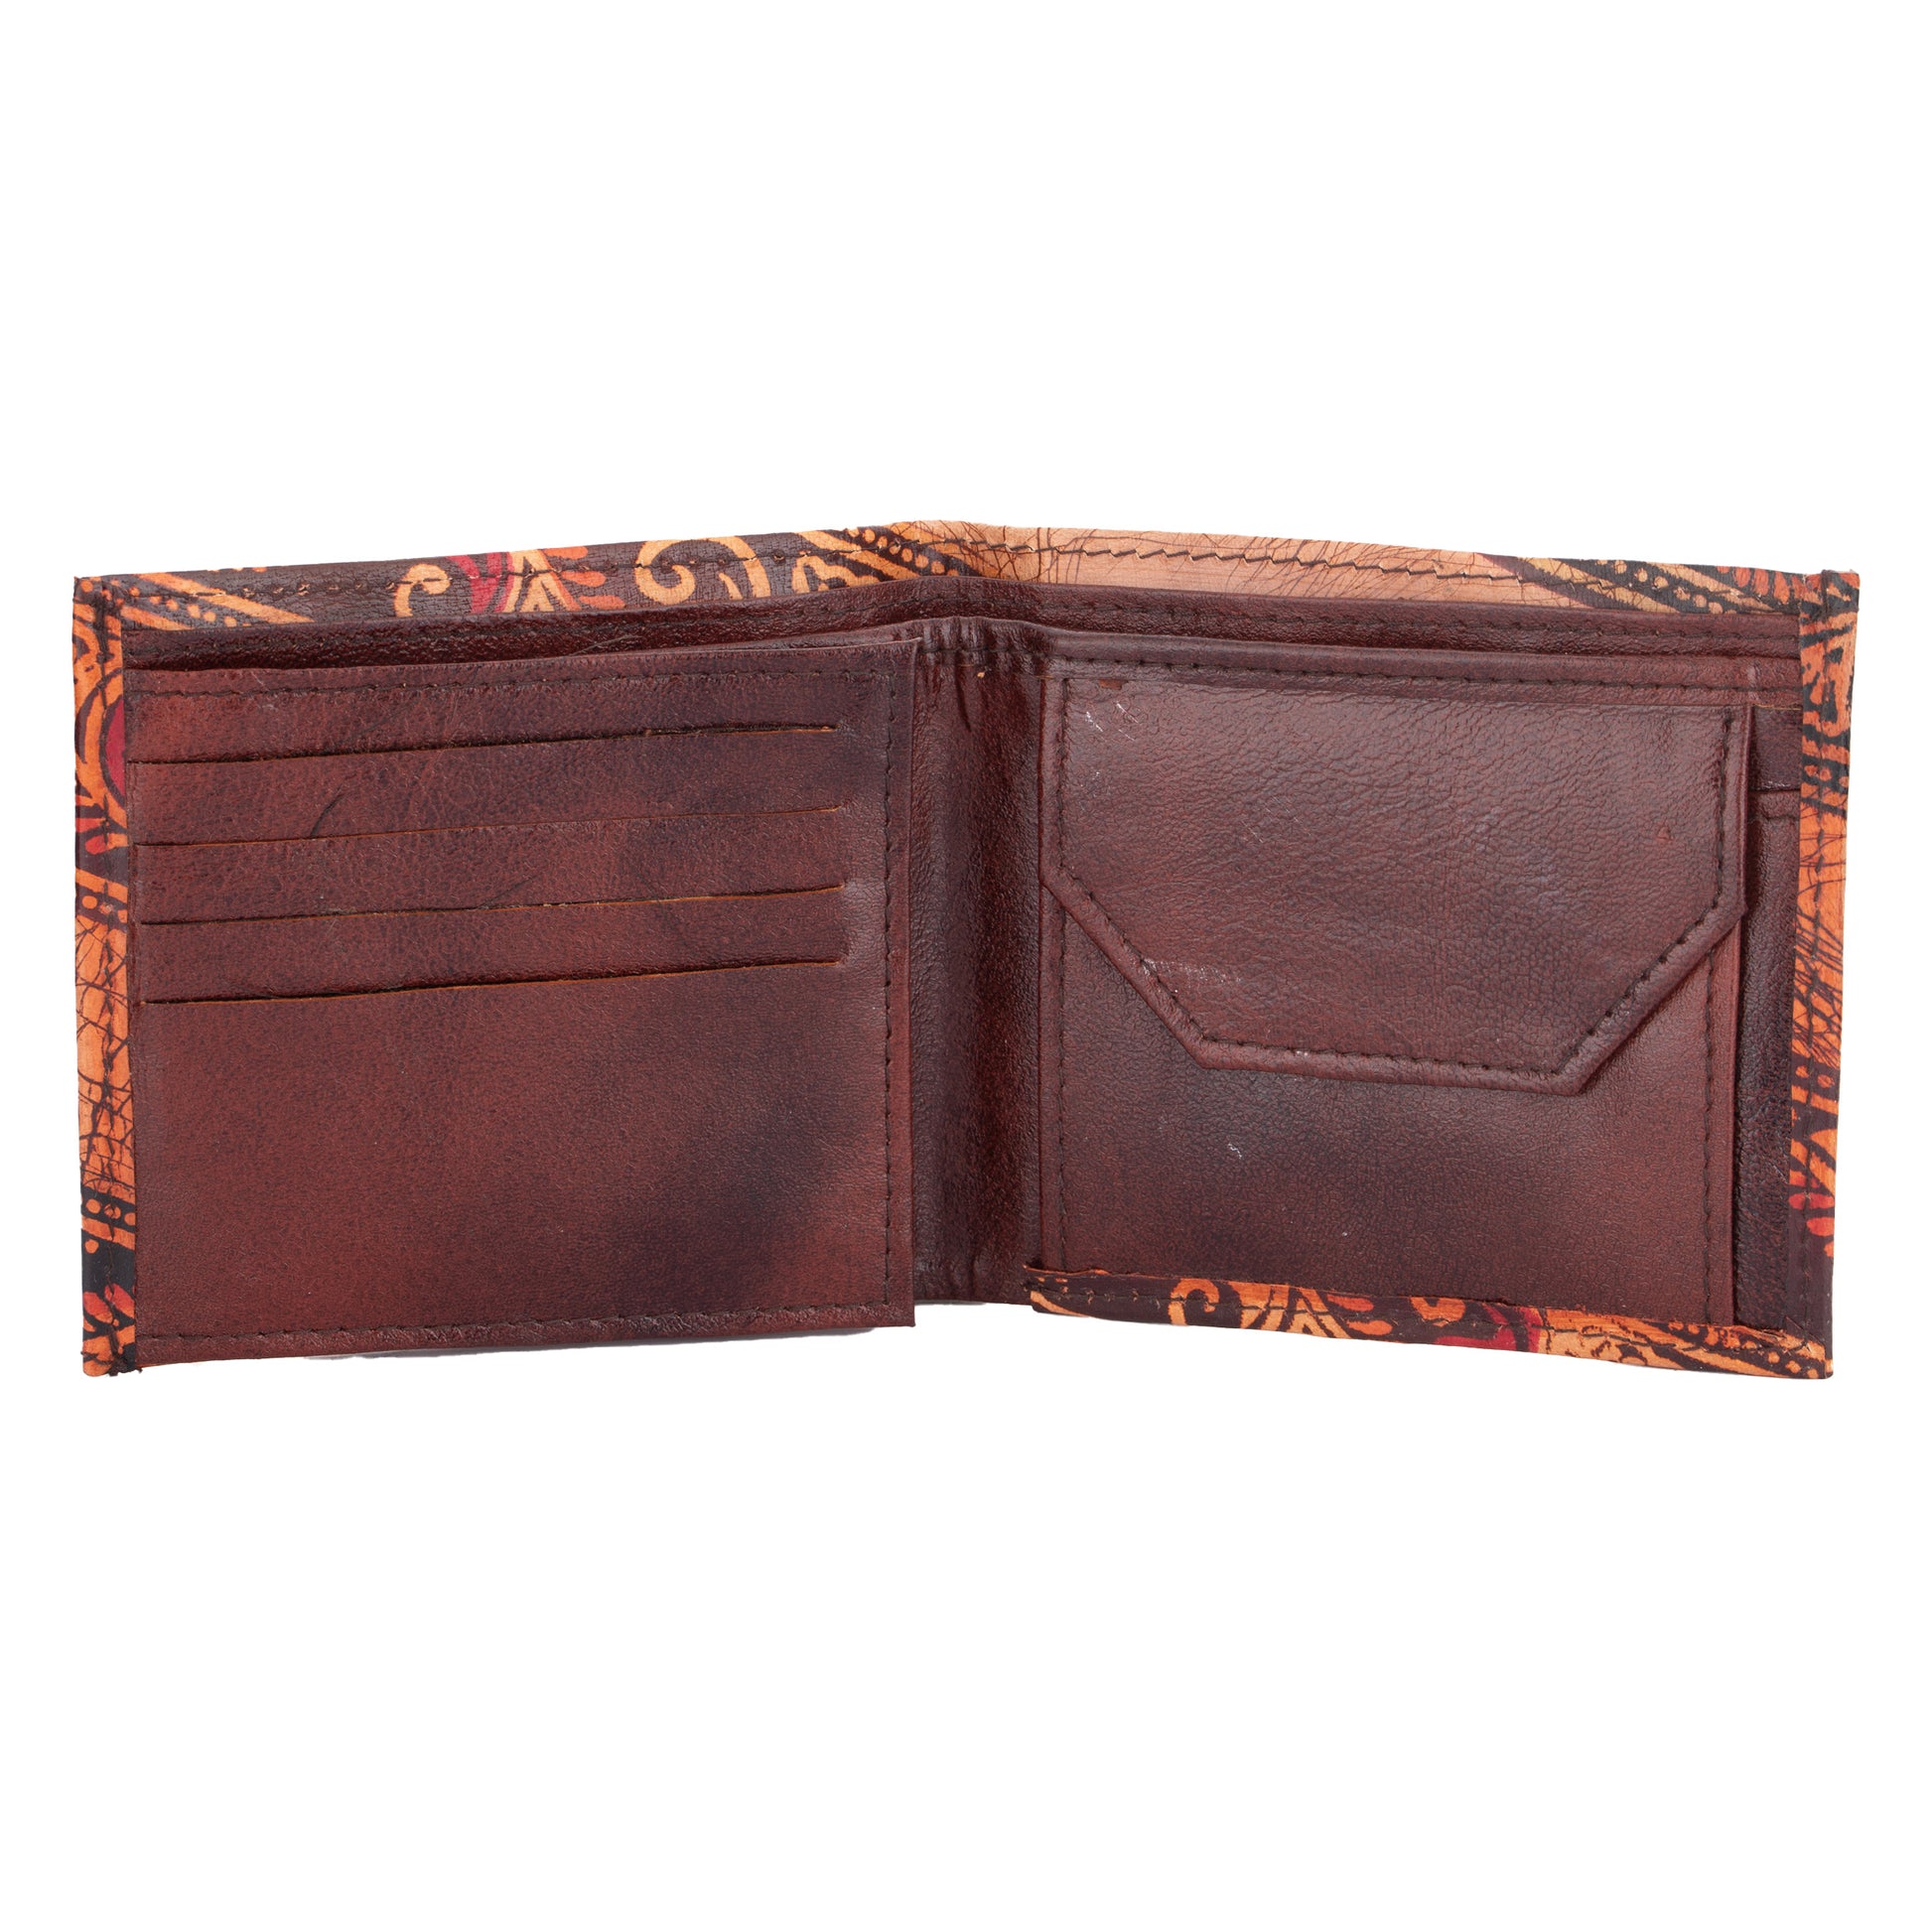 shantiniketan-pure-leather-printed-men-s-wallet-w04